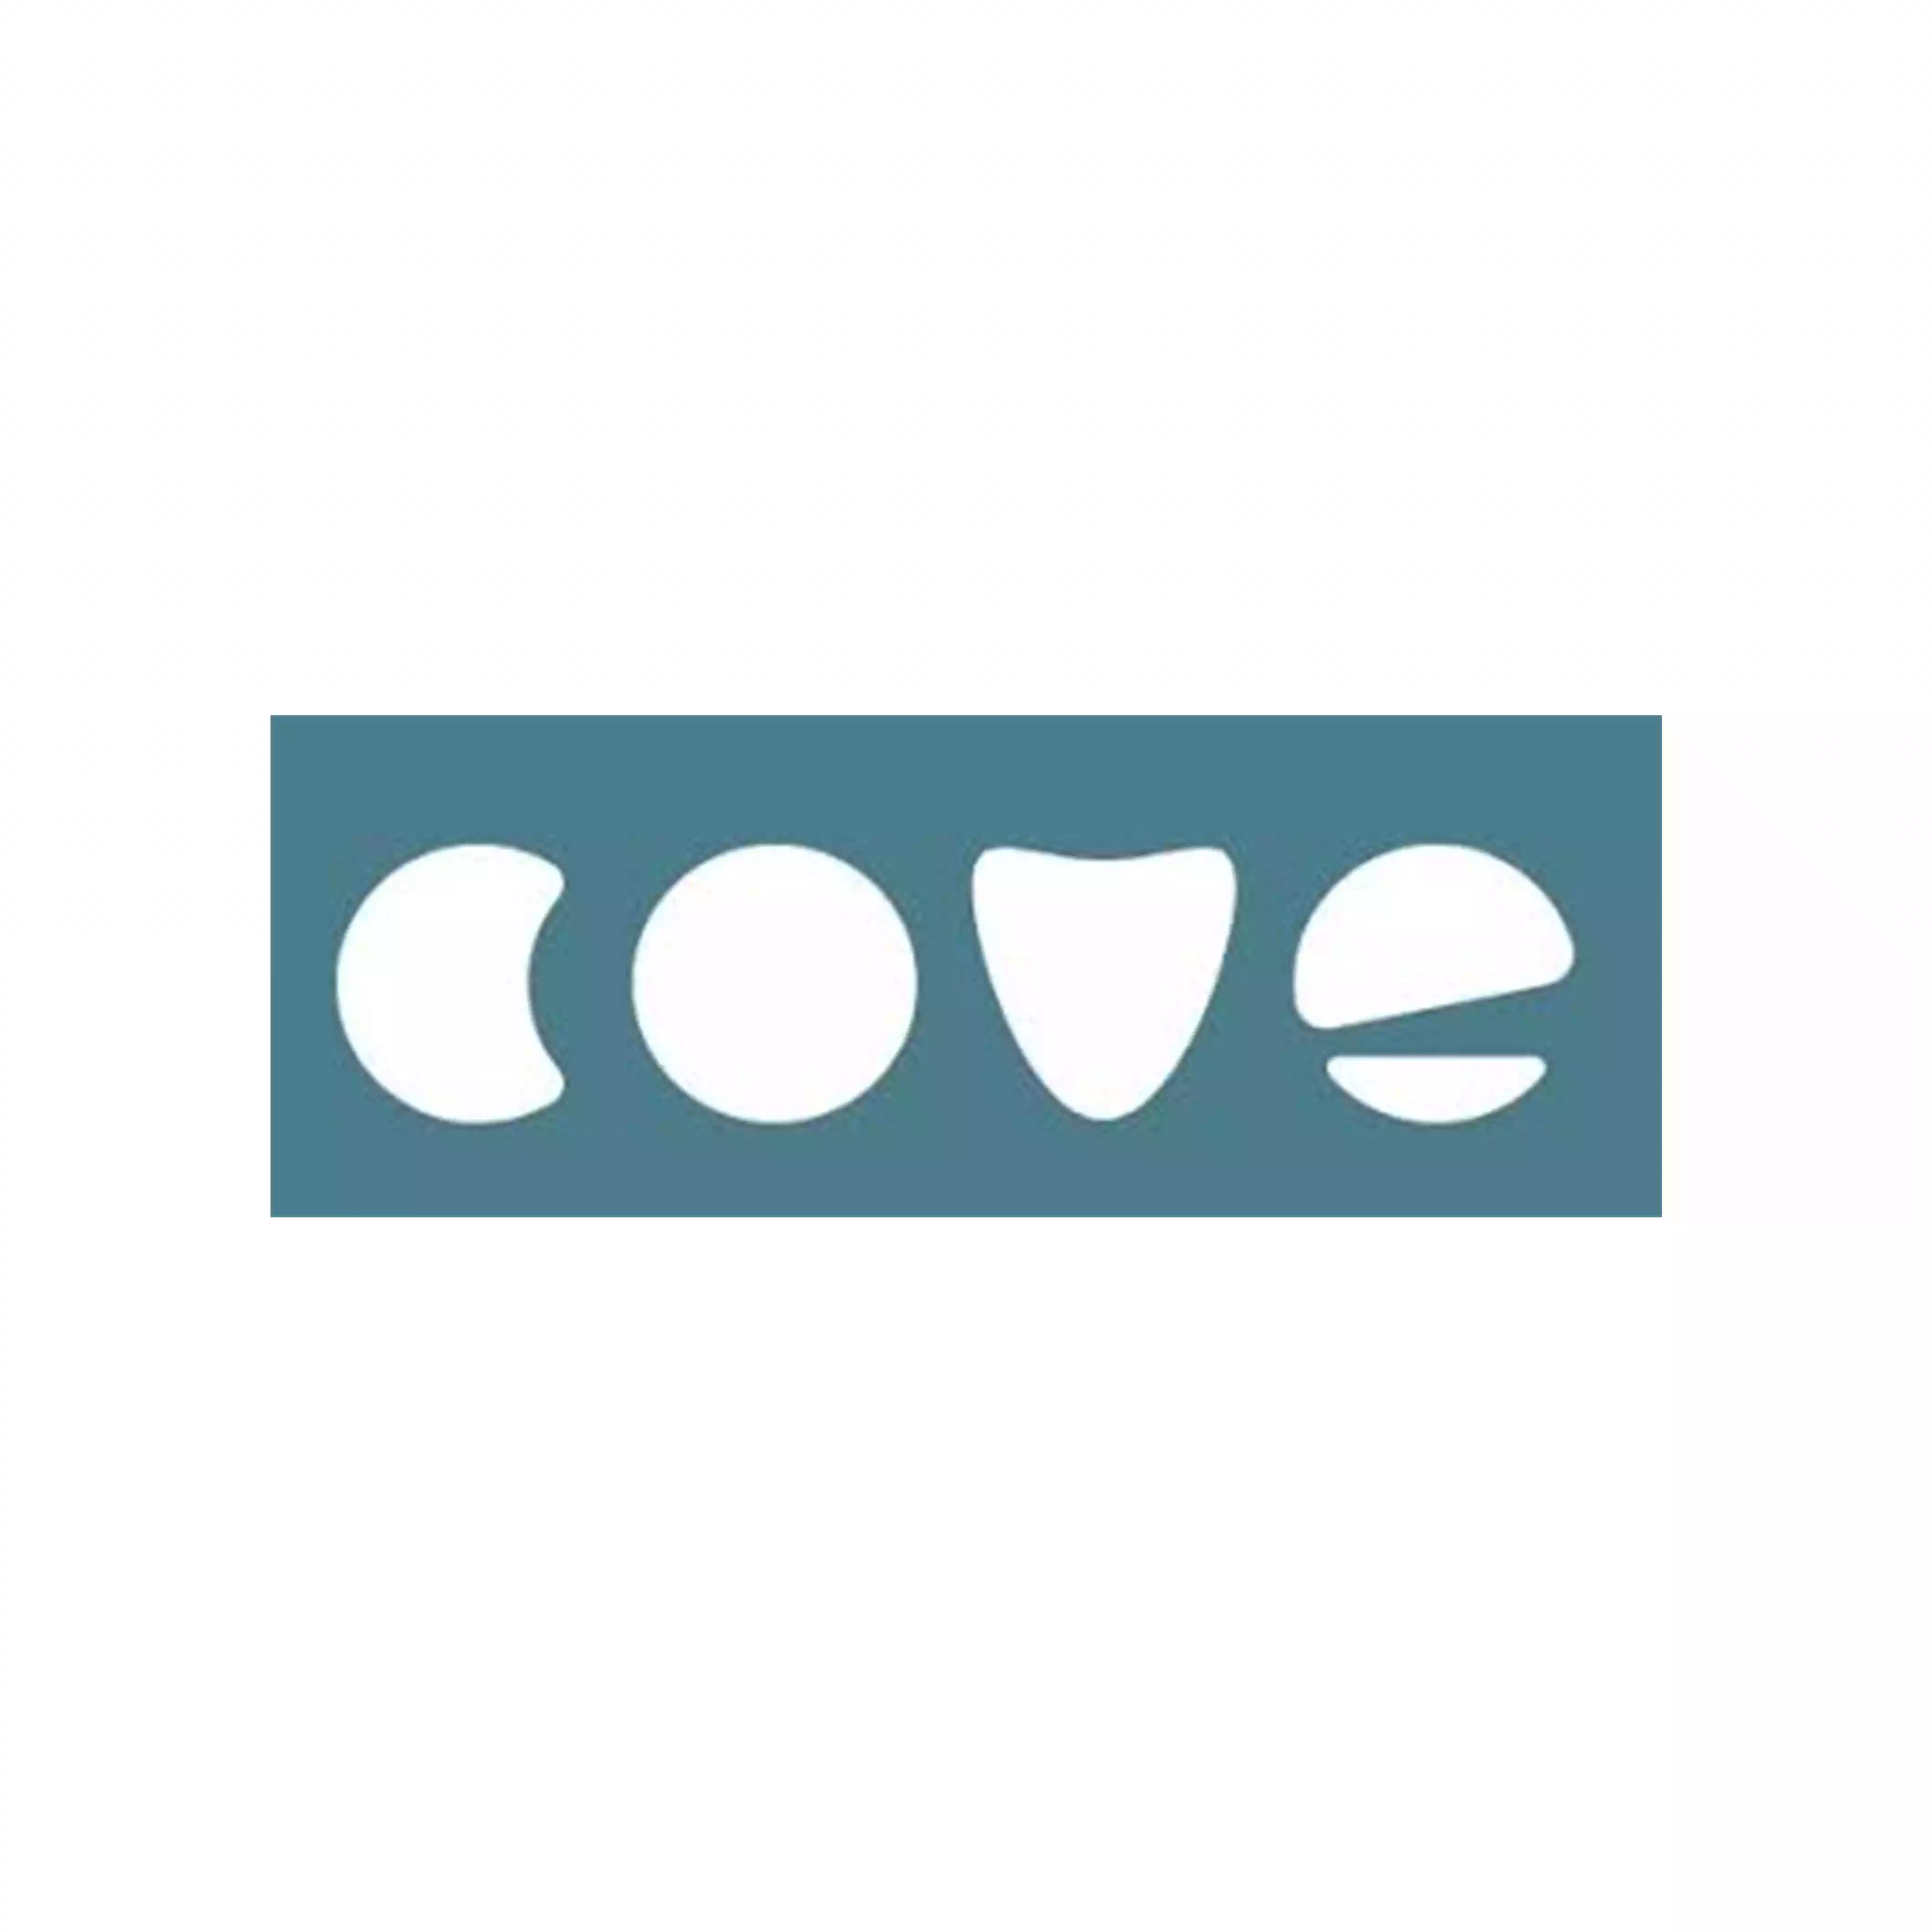 Shop Feel cove promo codes logo